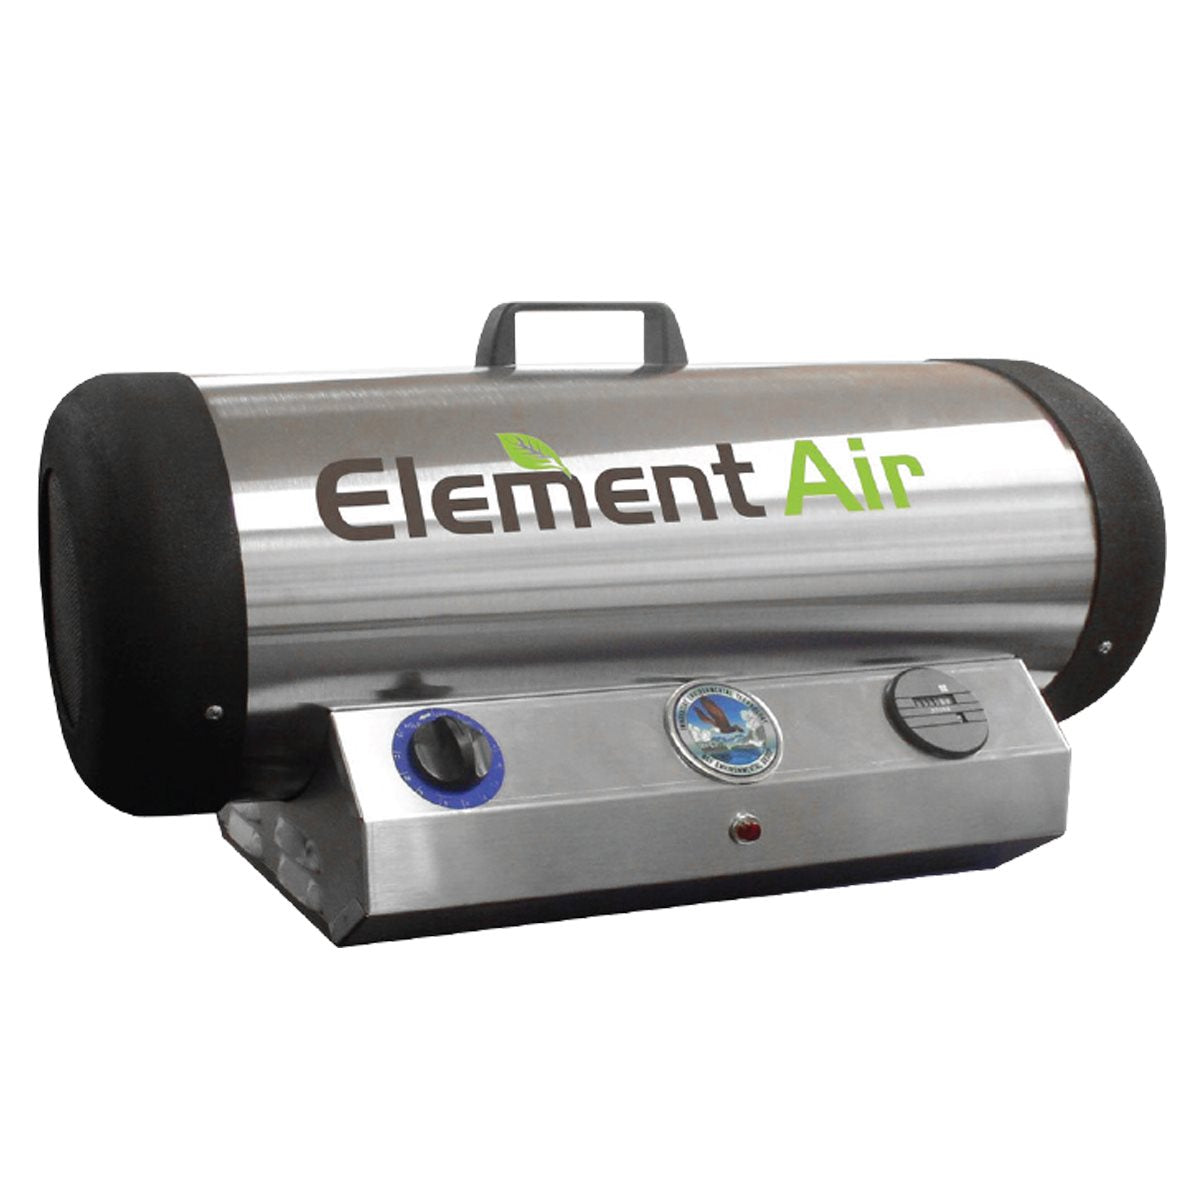 Product Image:Element Air Turbozone